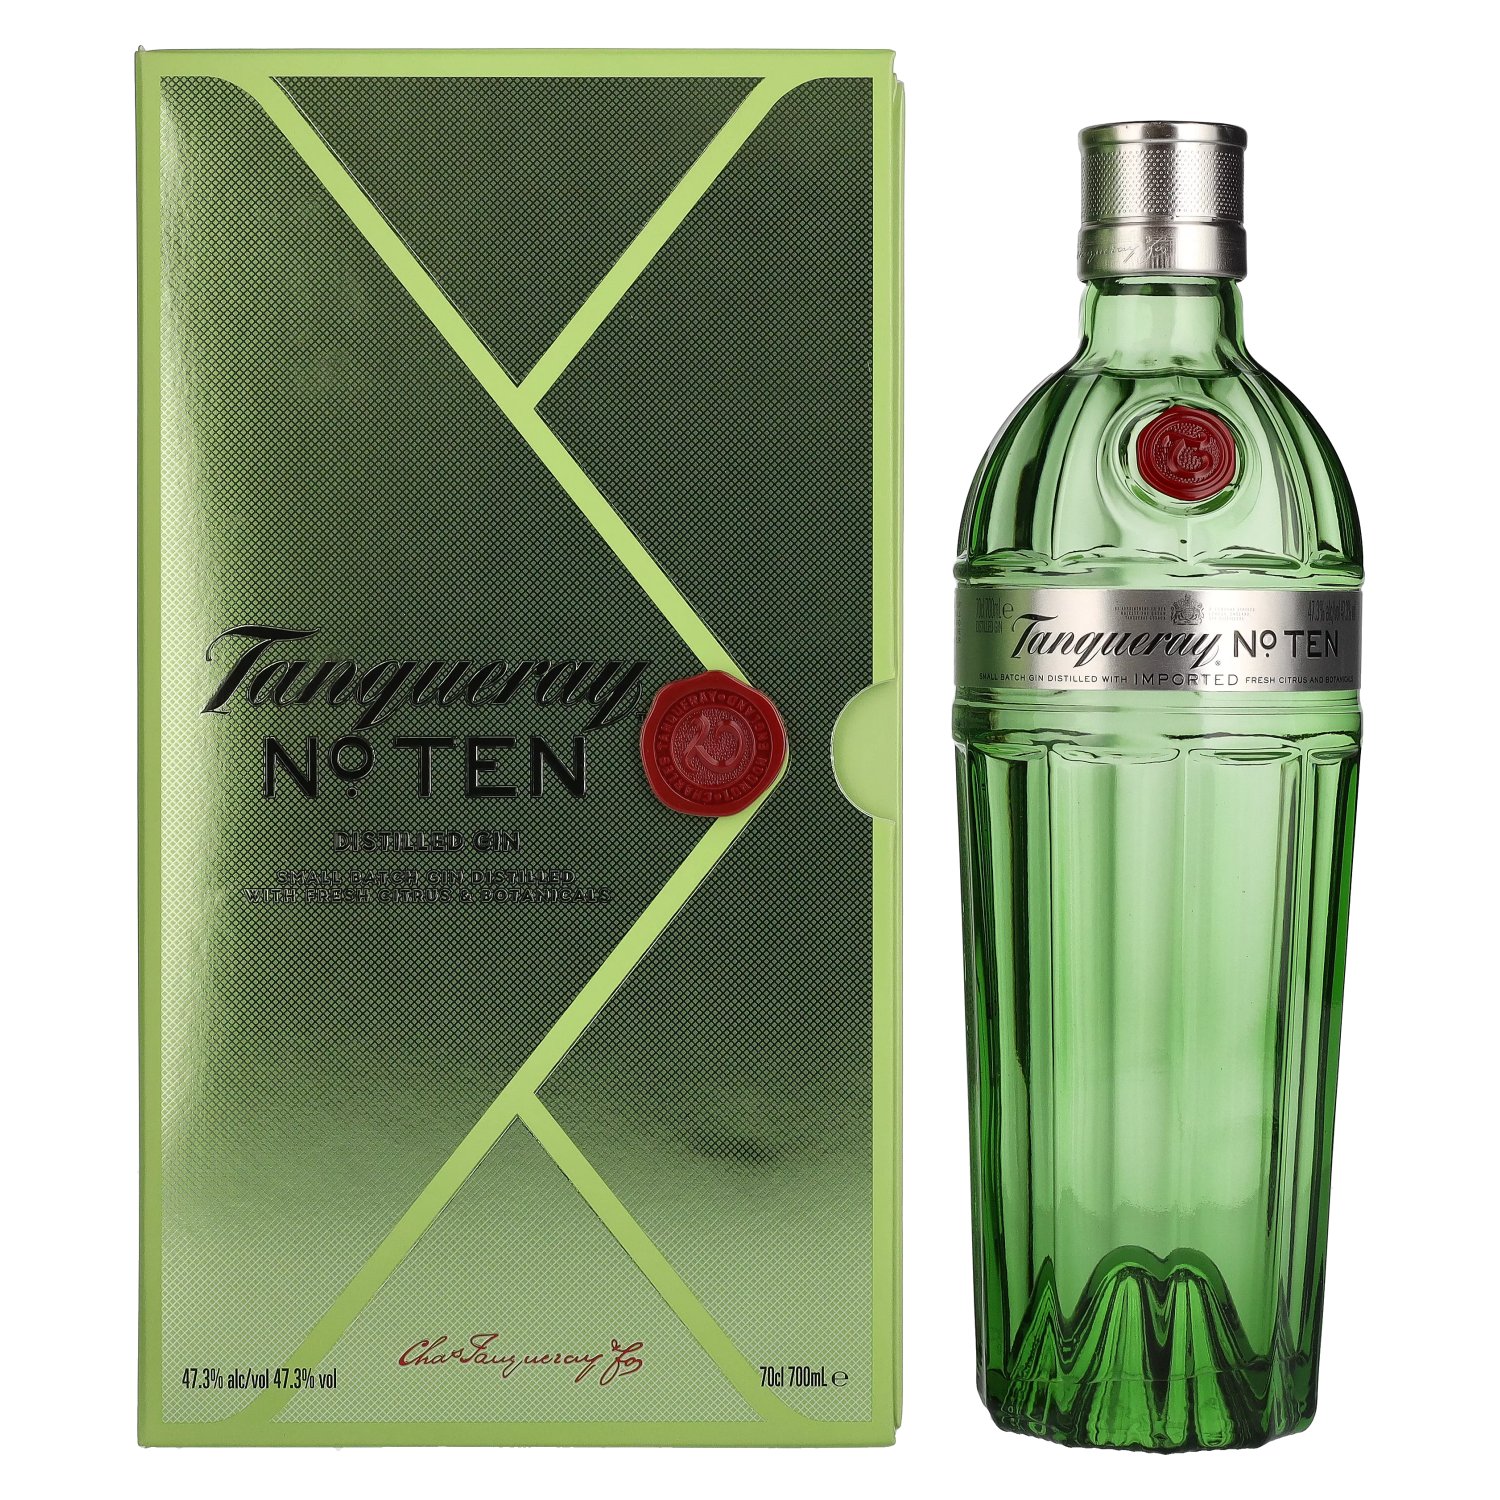 Vol. N° Distilled TEN 0,7l in 47,3% Gin Giftbox Tanqueray